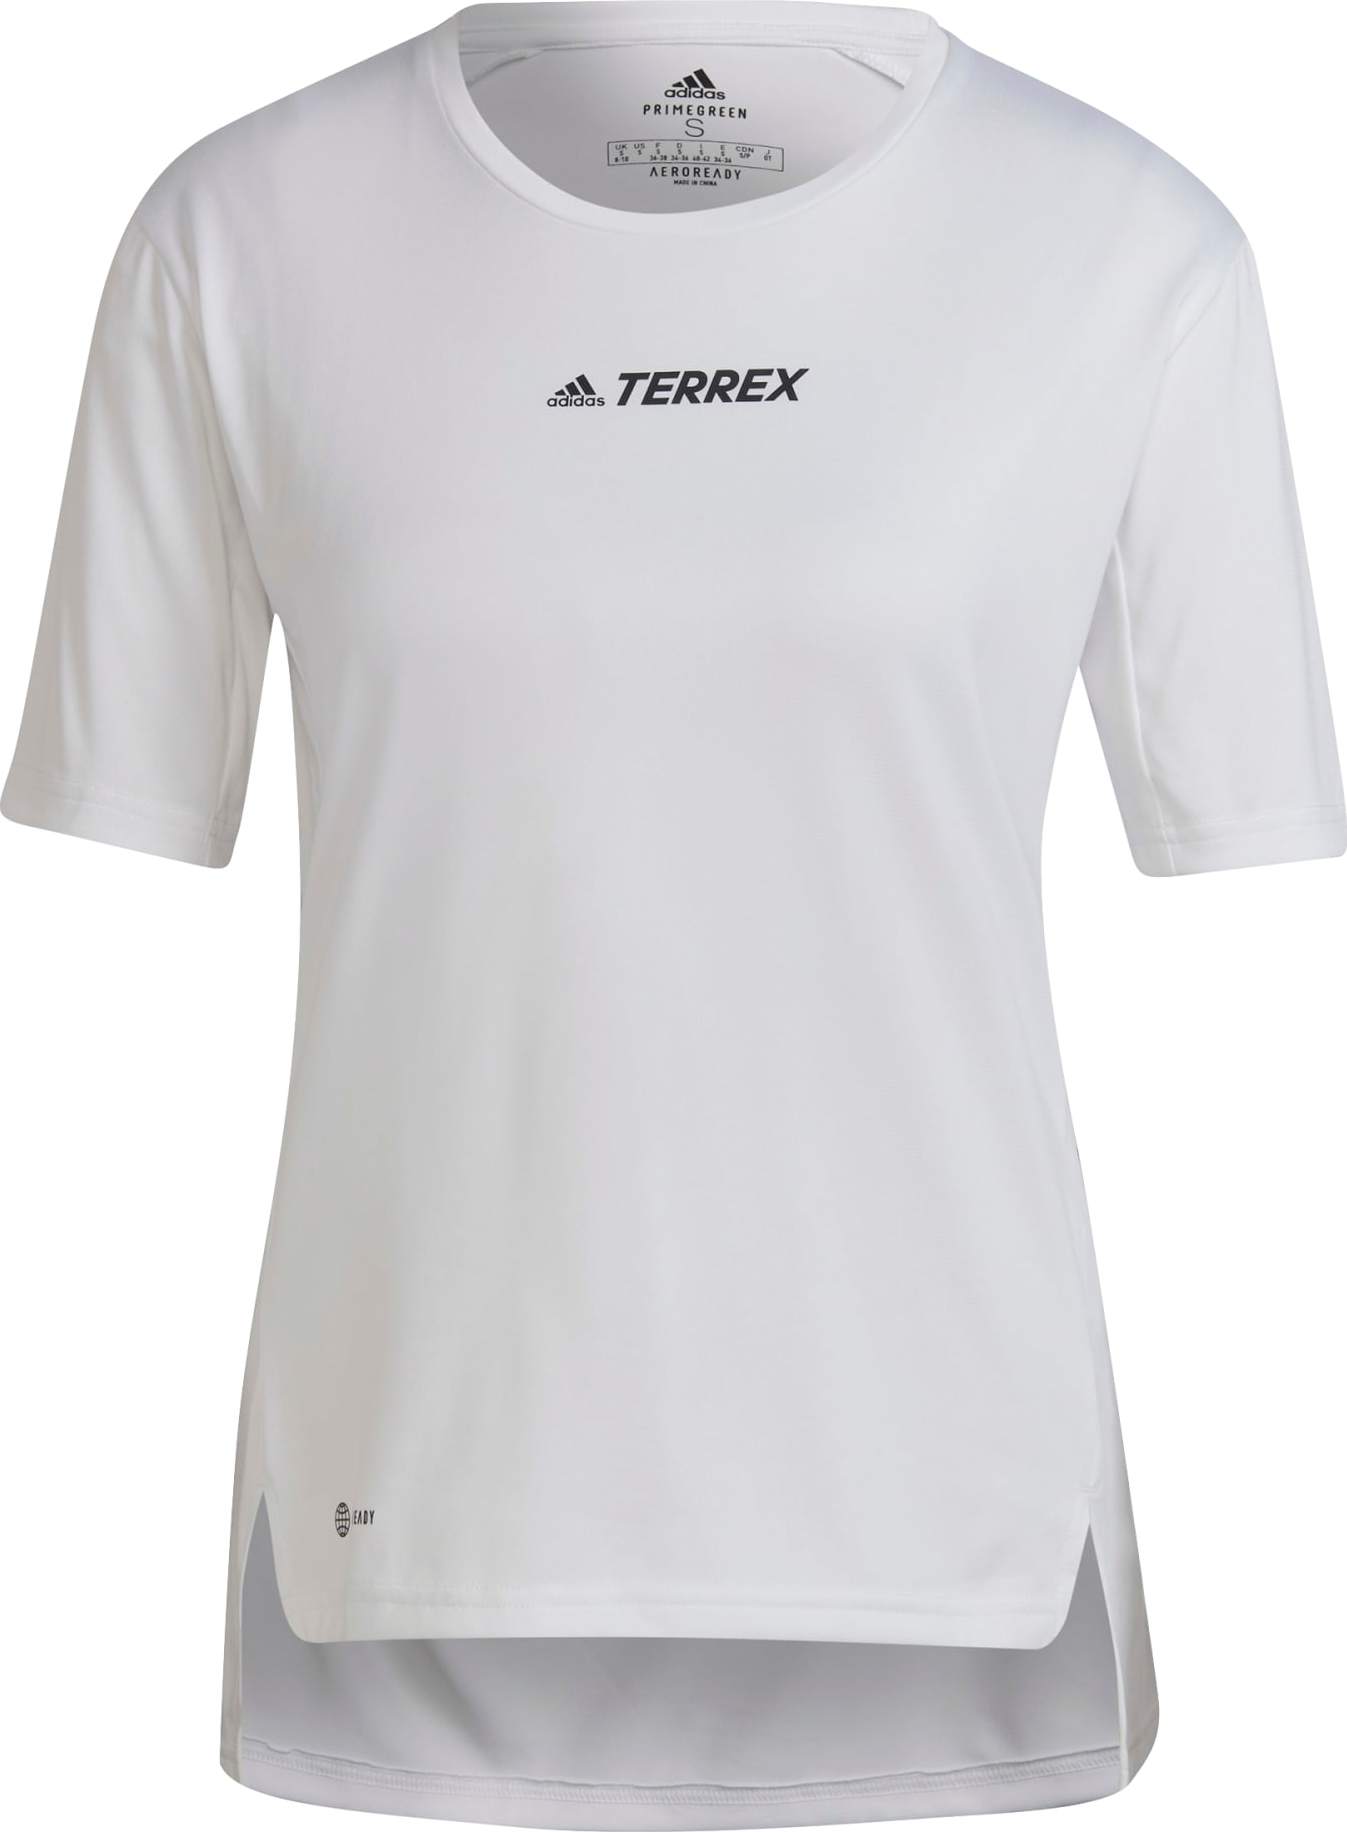 Adidas Women’s Terrex Multi T-Shirt White